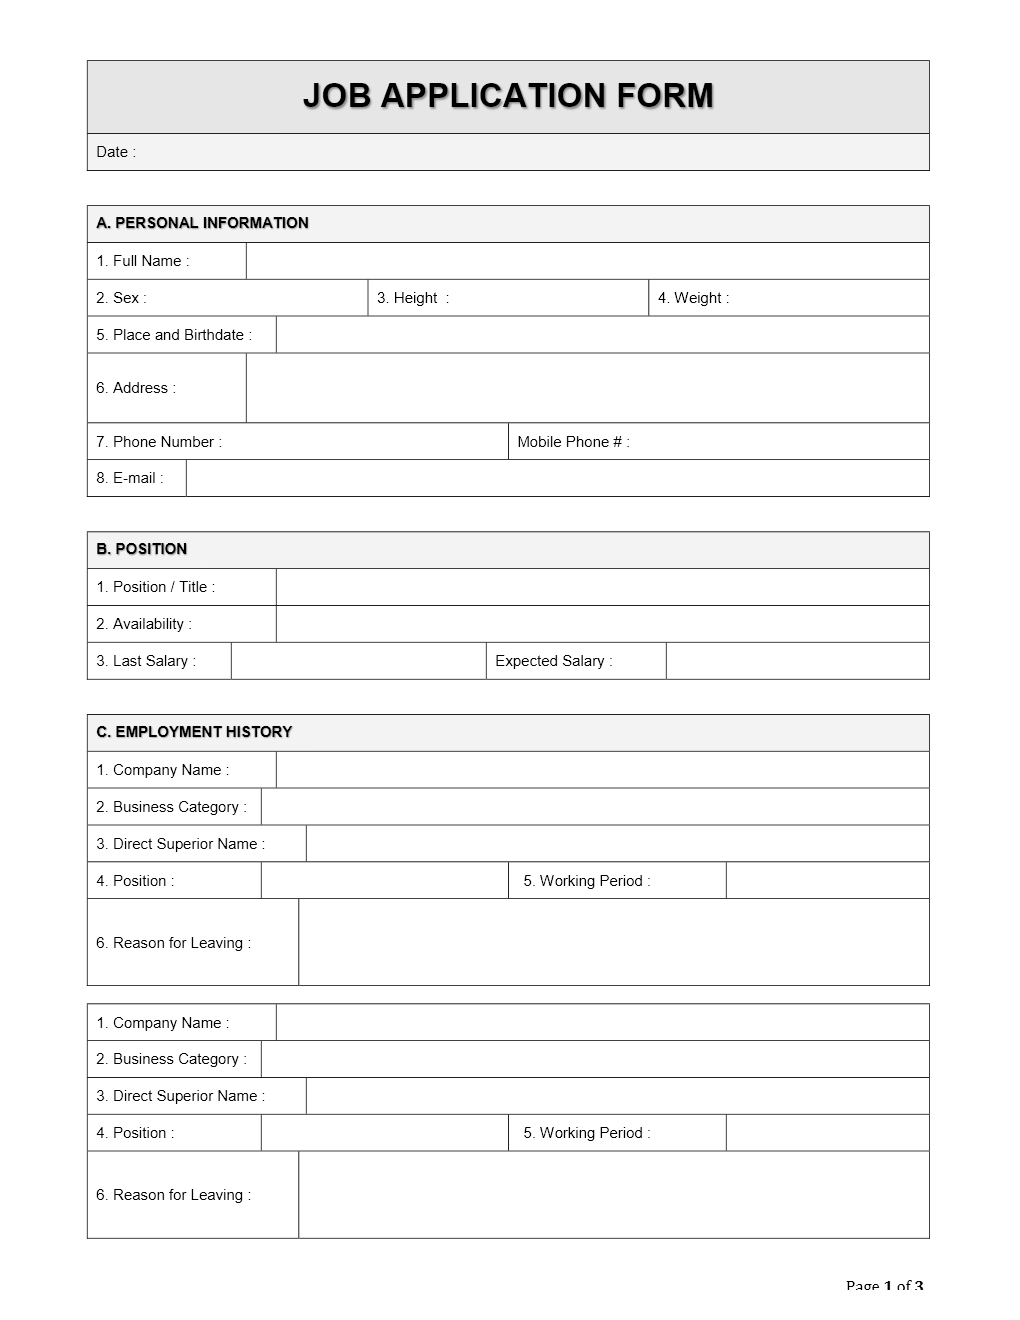 Funny employee job application form